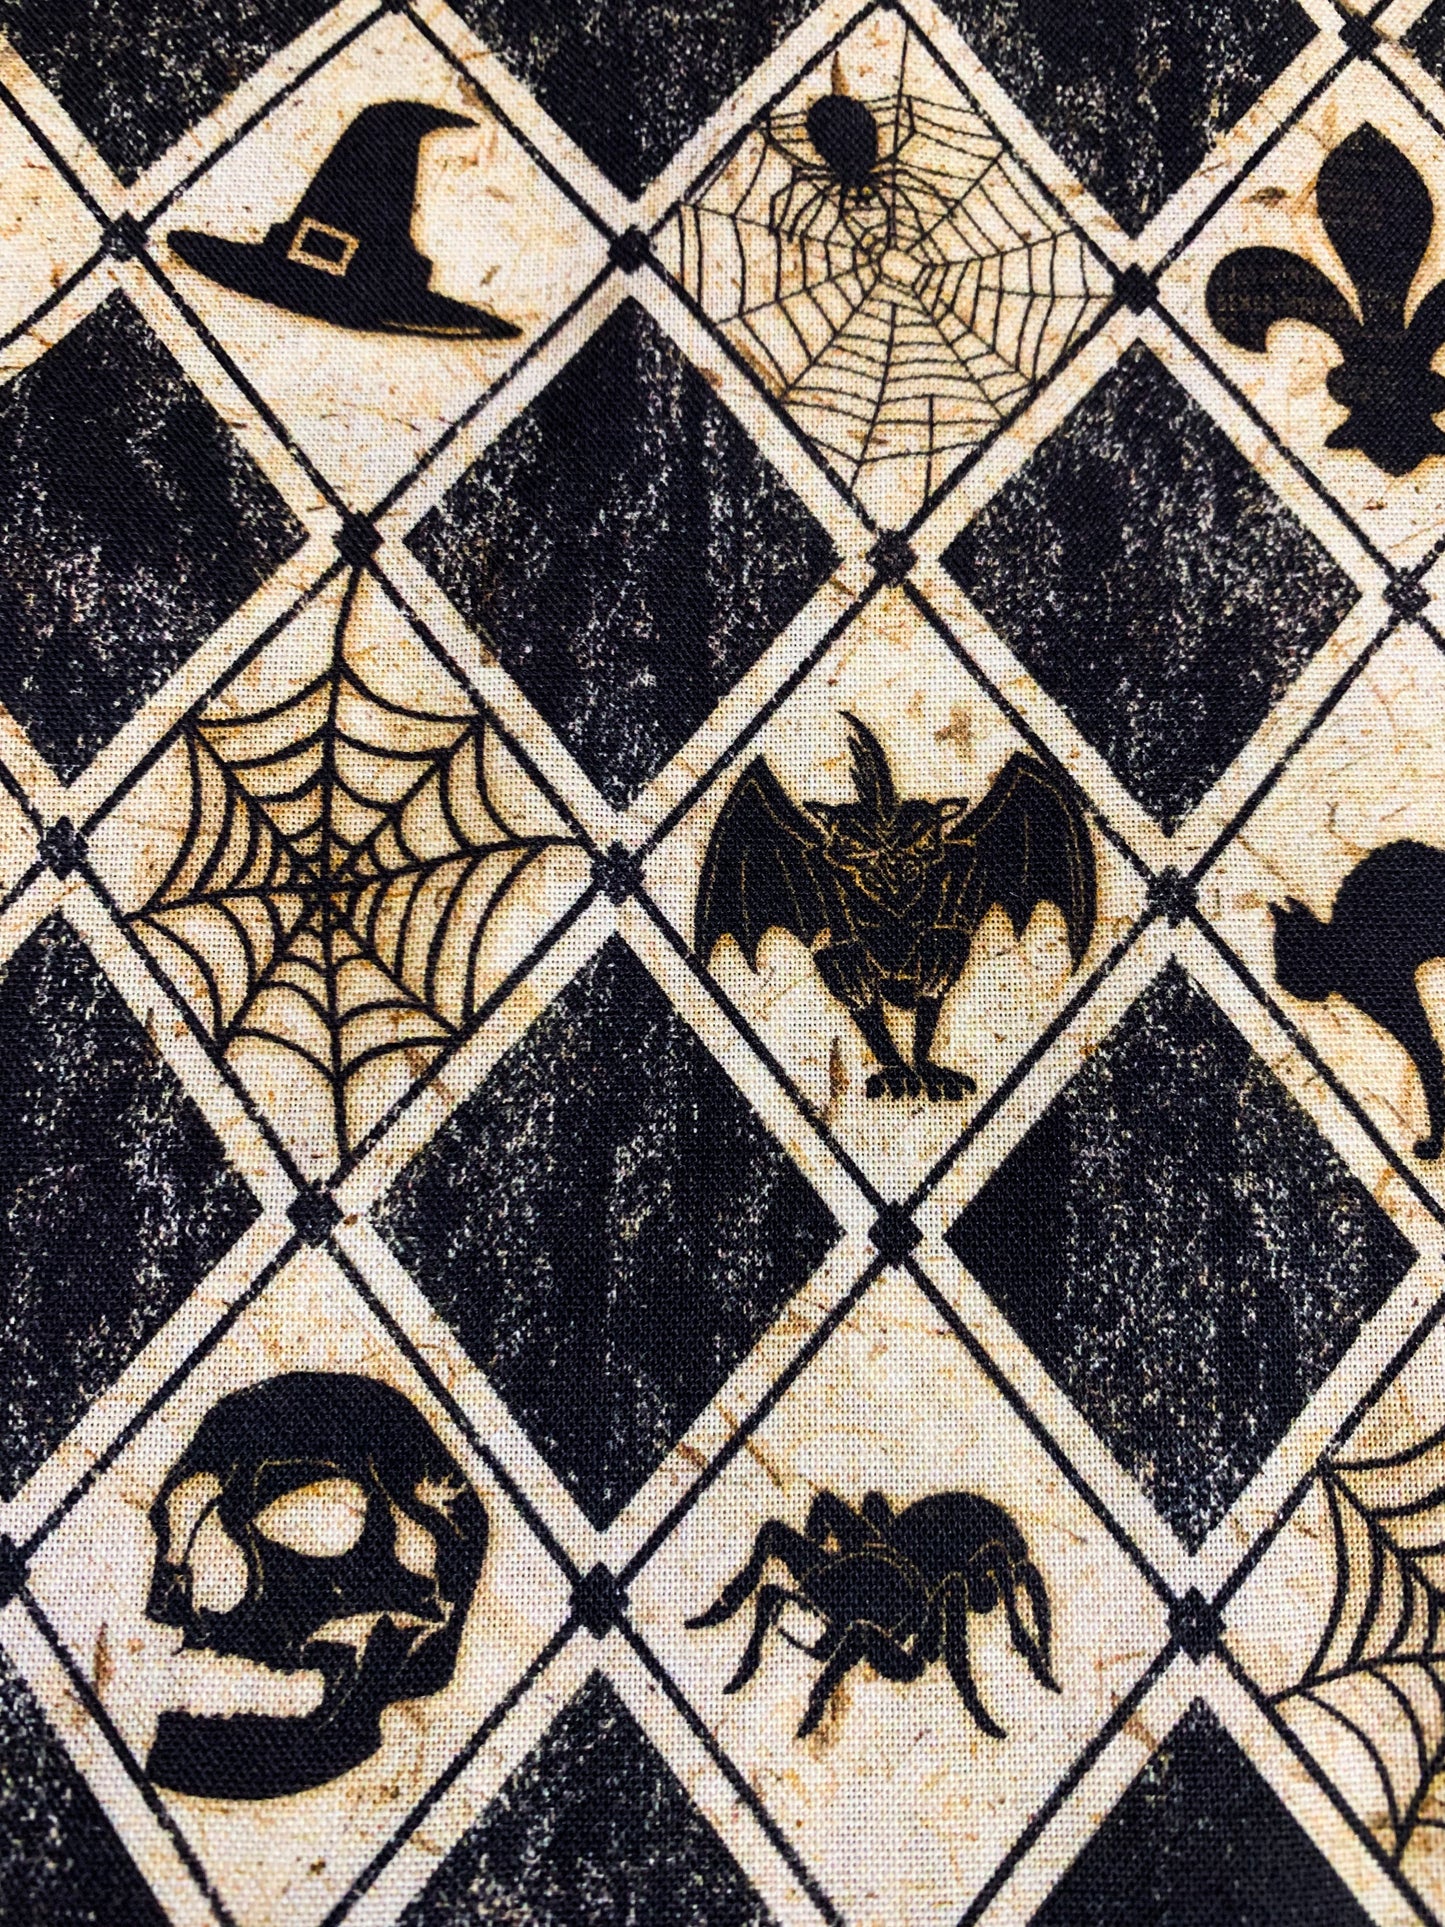 Spooky diamond Halloween fabric bats and spider fabric